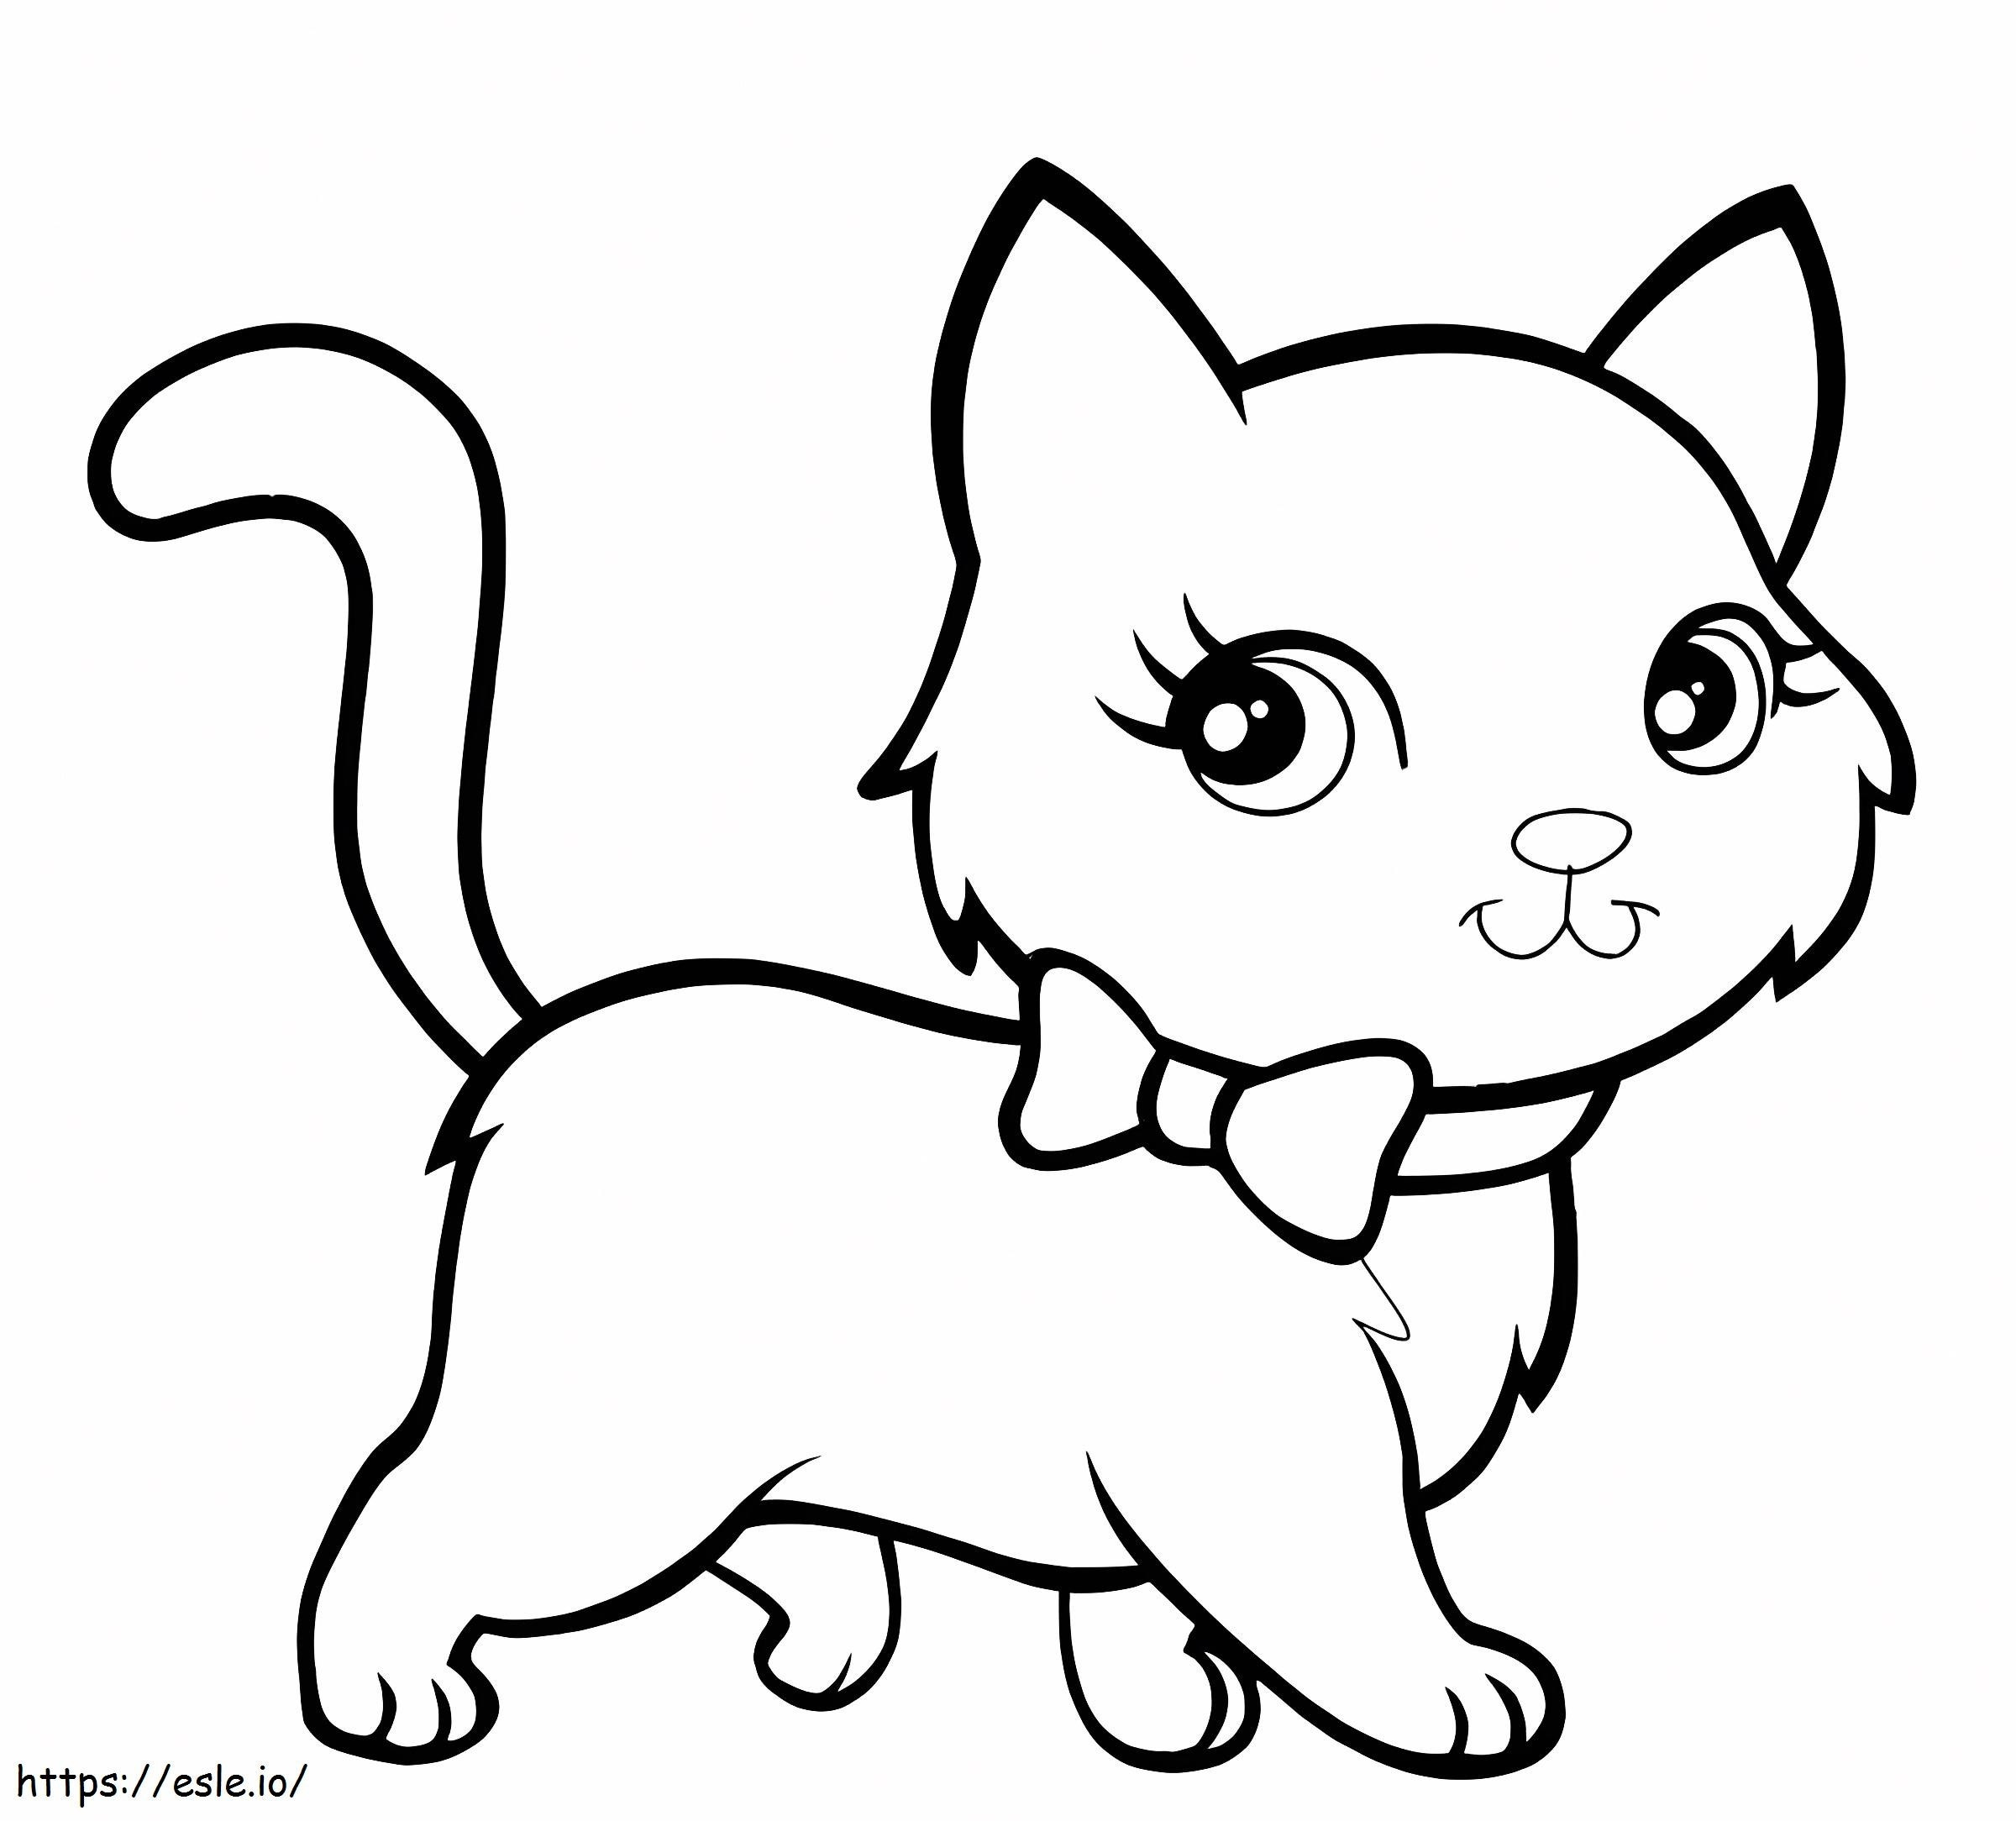 Beatiful Kitty coloring page